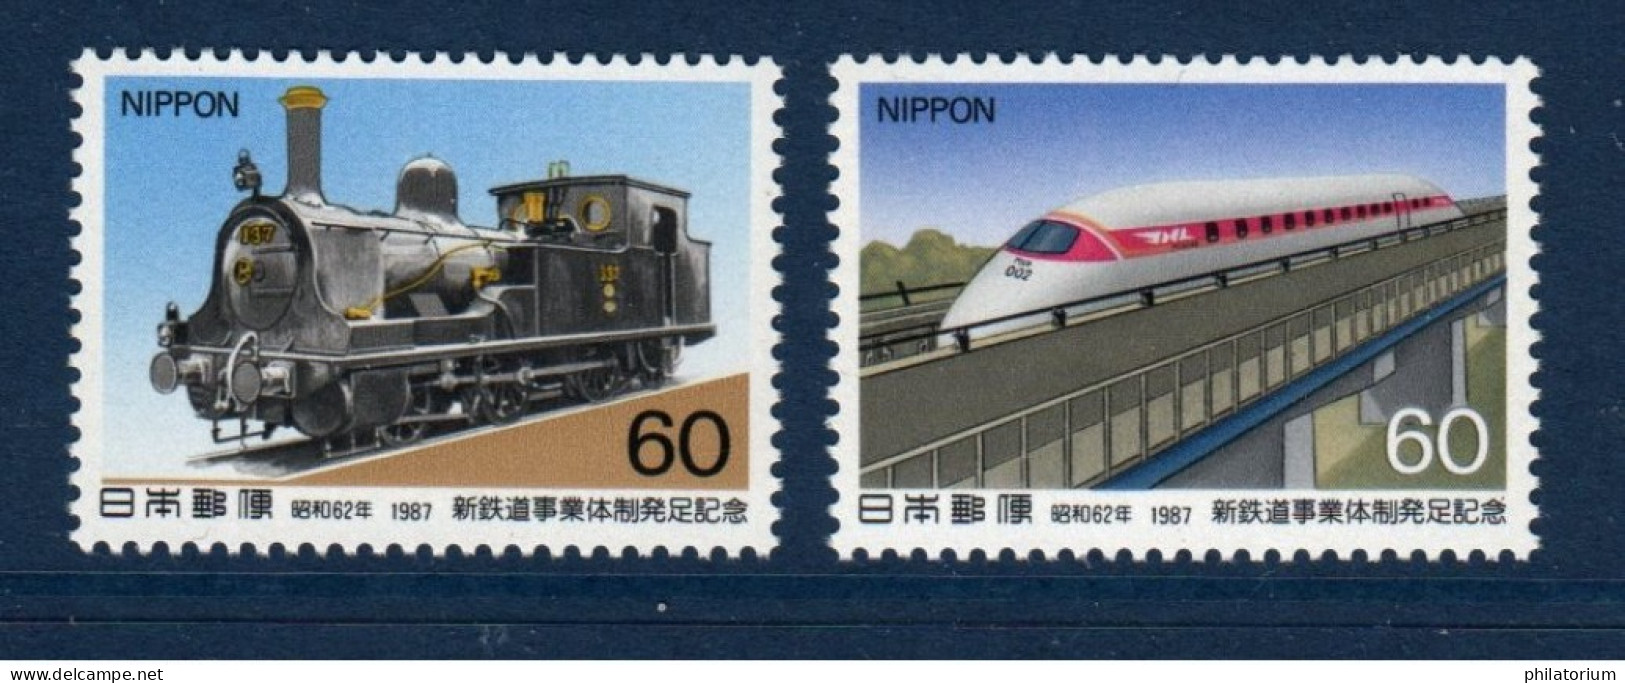 Japan, Japon, **, Yv 1627, 1628, Mi 1731, 1732, Train, - Neufs